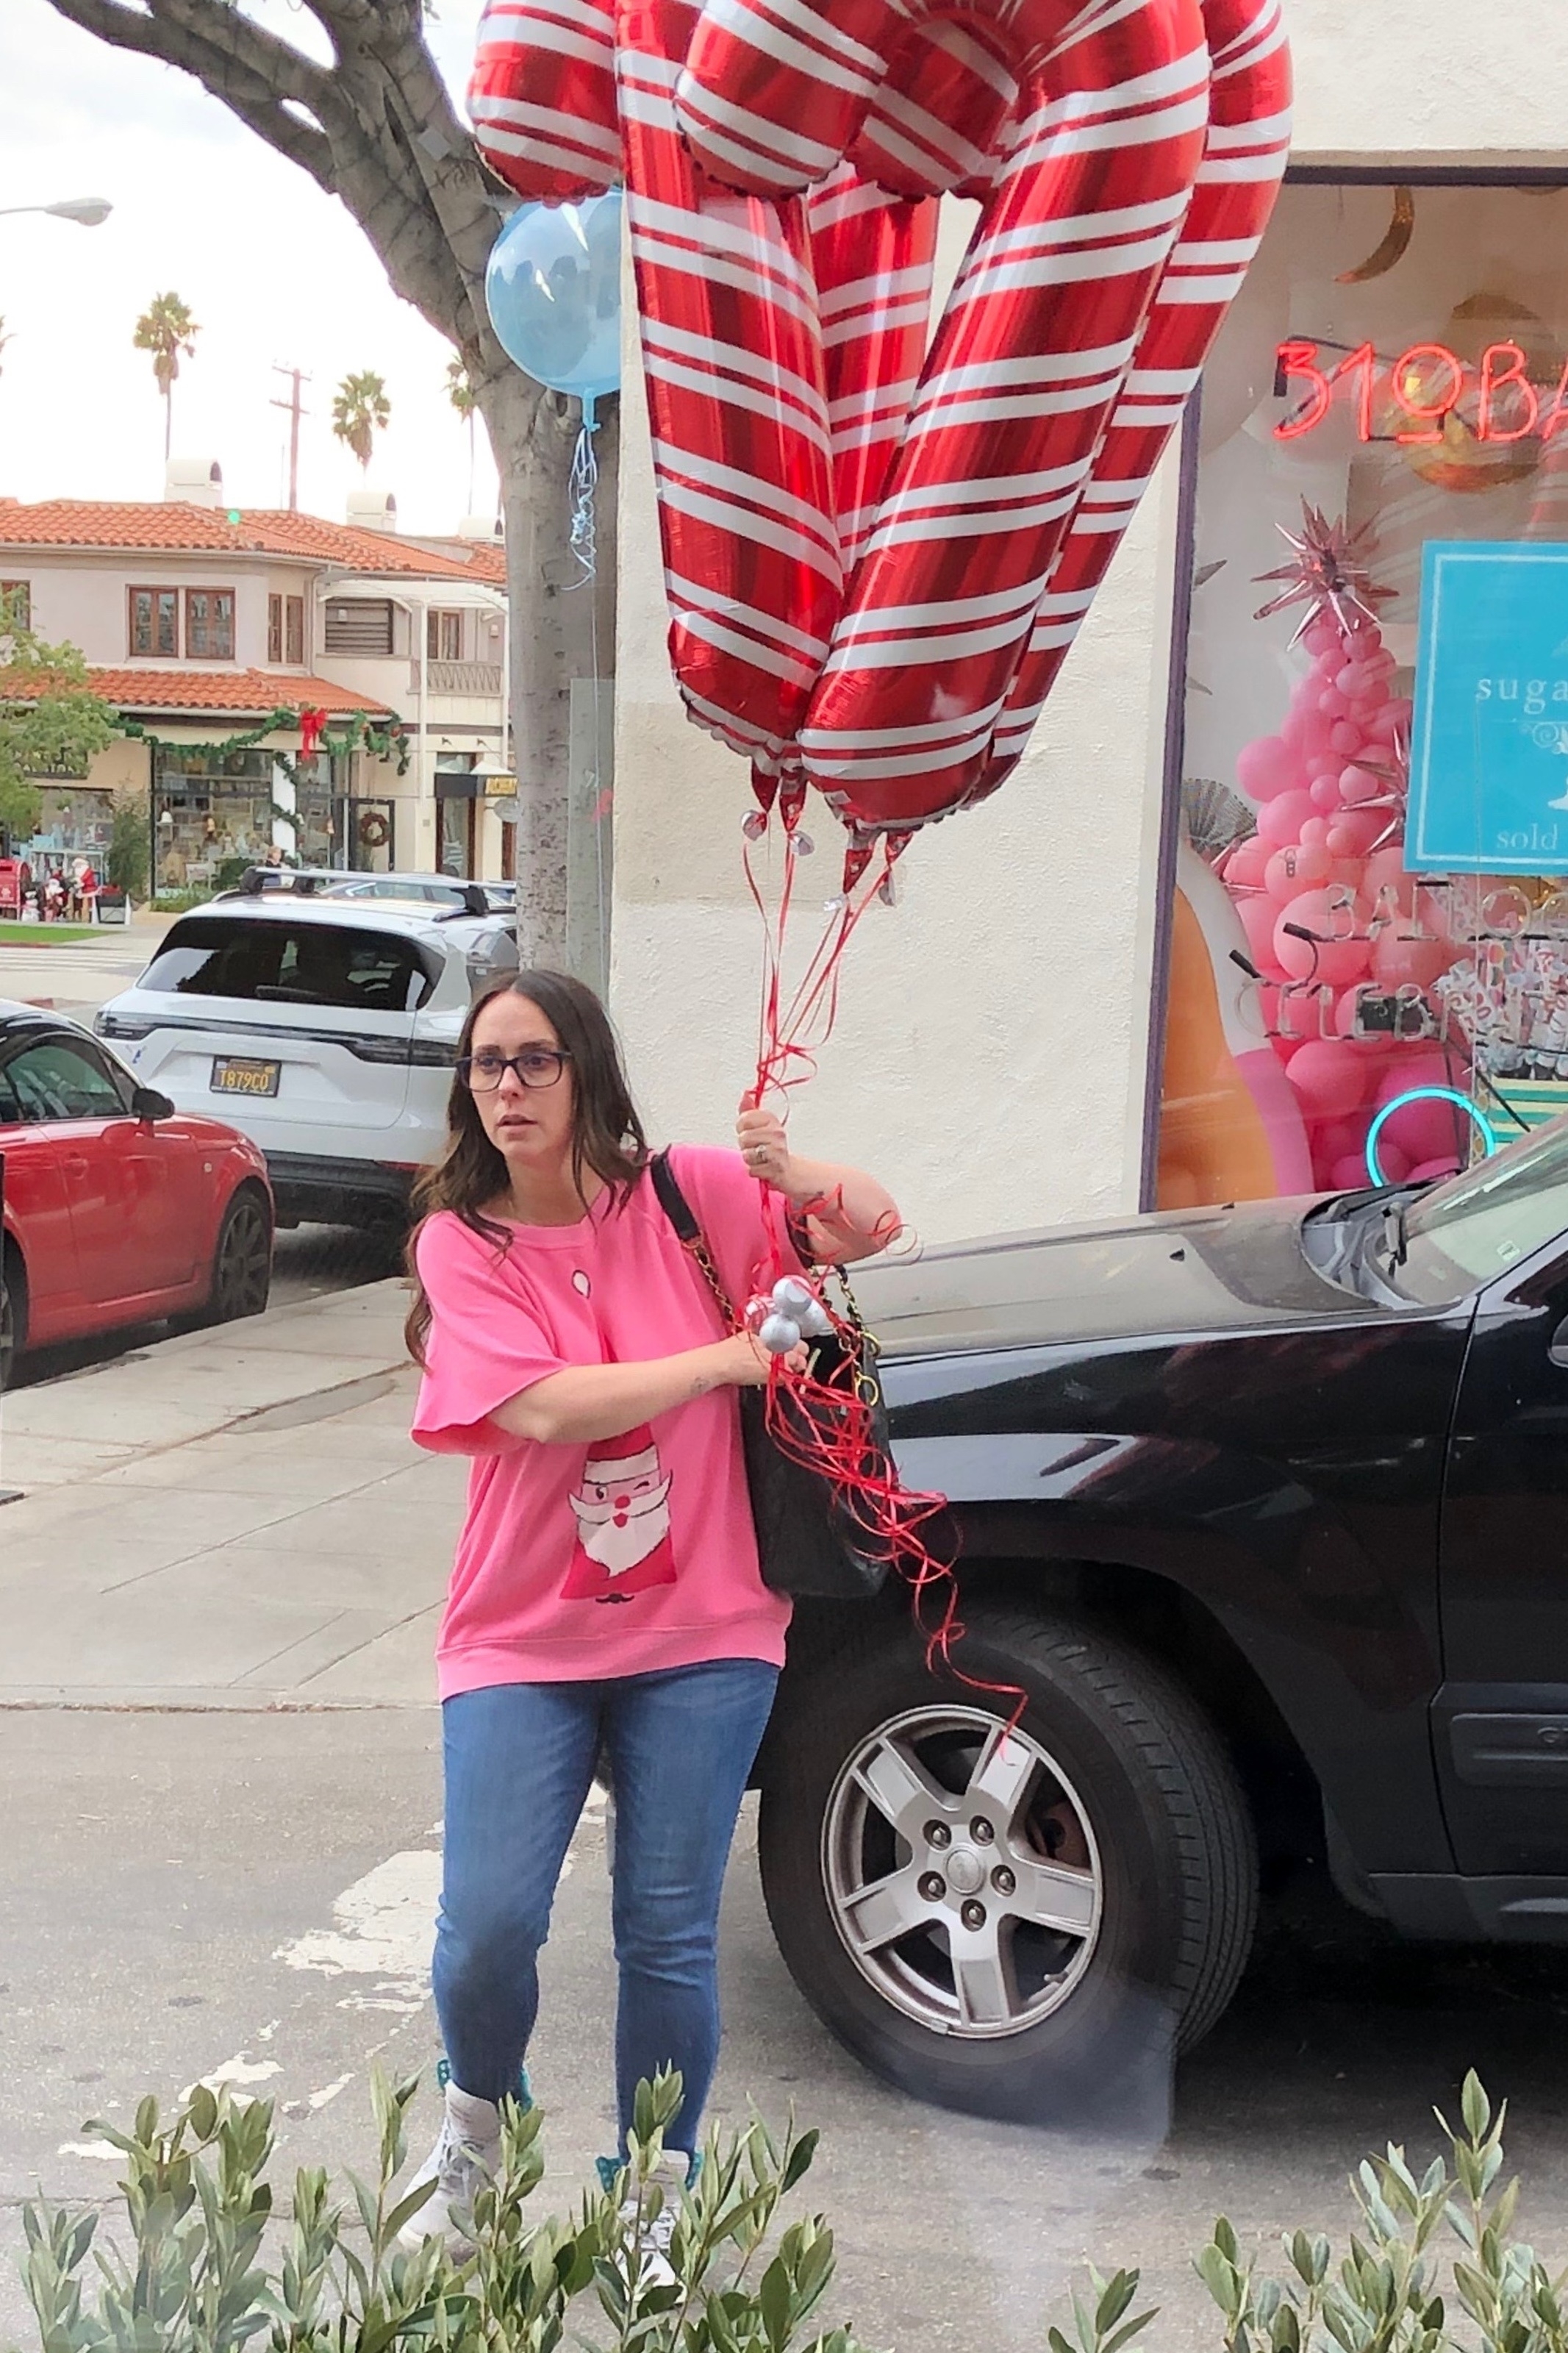 Jennifer Love Hewitt Purchasing Some Candy Cane Balloons